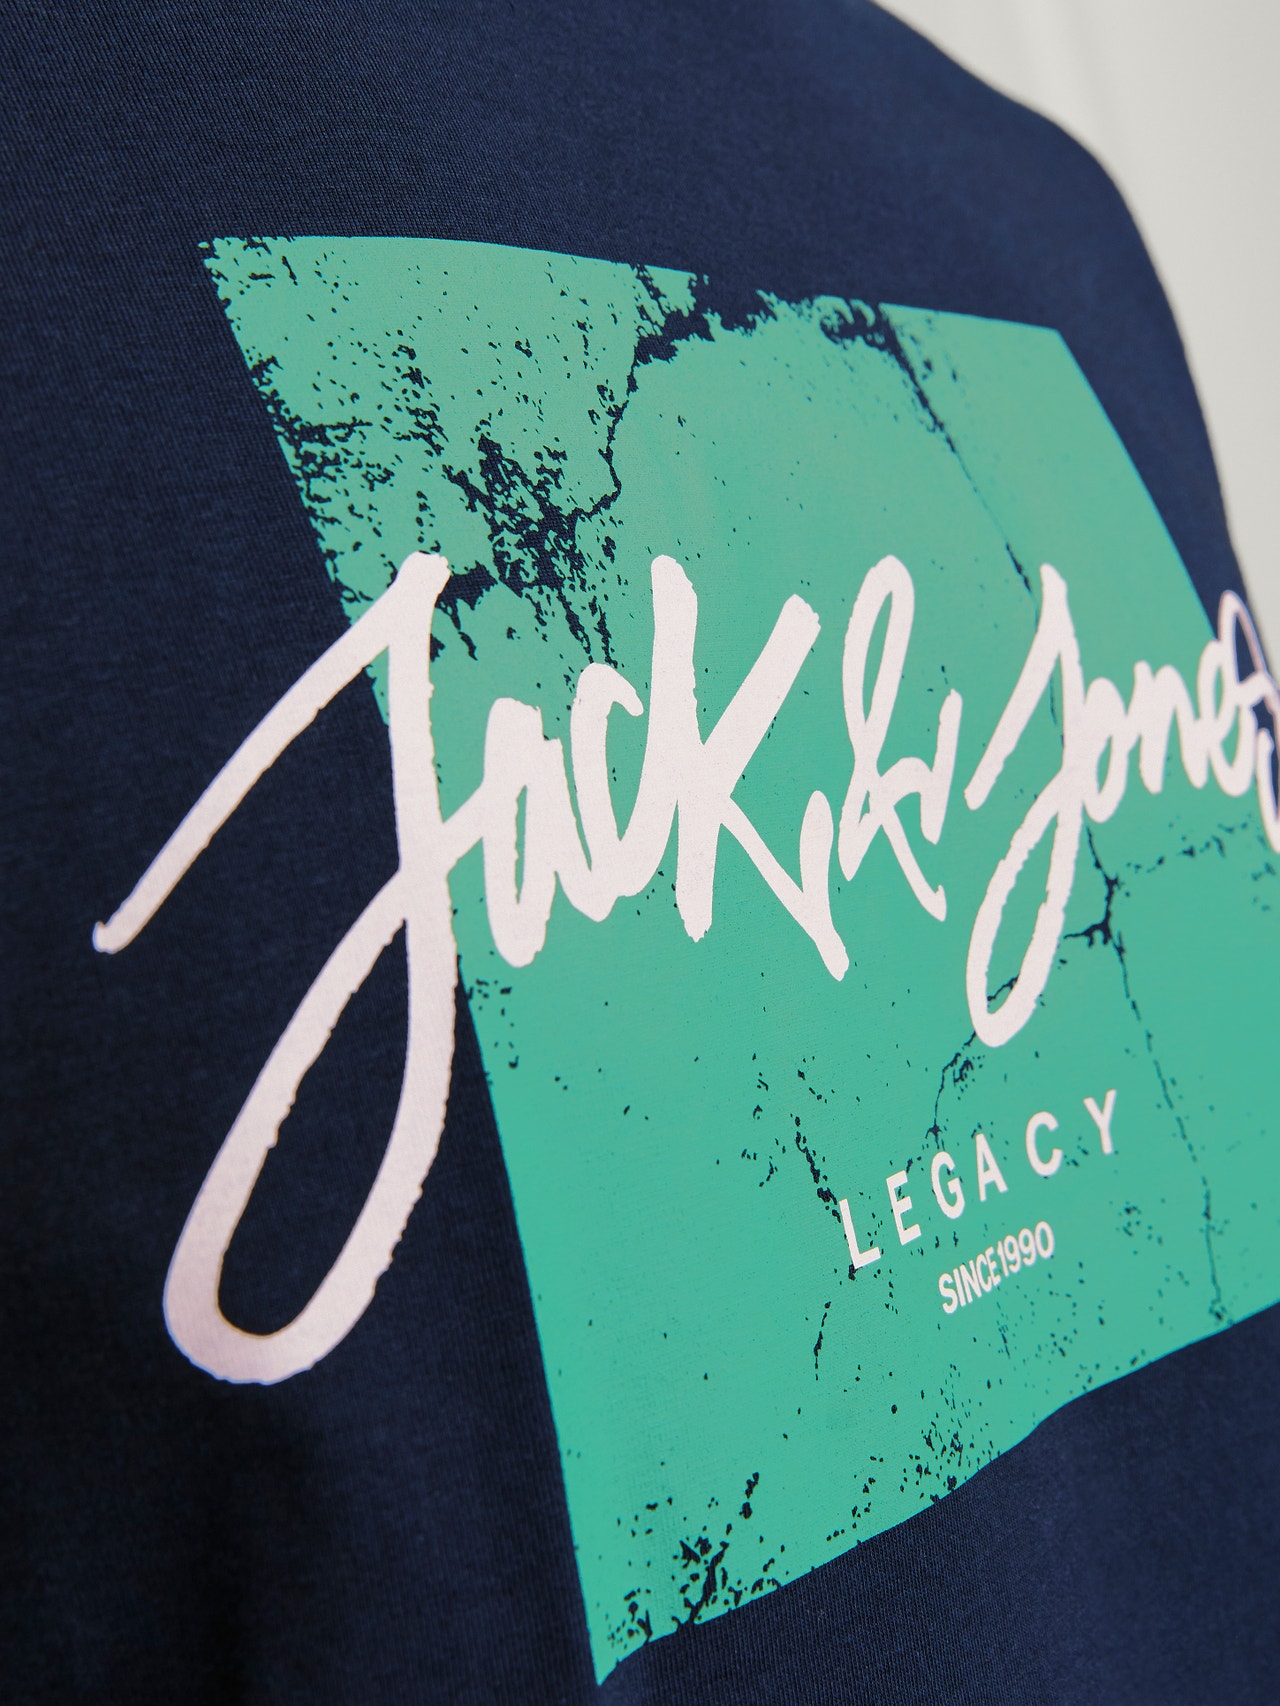 Jack & Jones Logo Rundhals T-shirt -Navy Blazer - 12256774